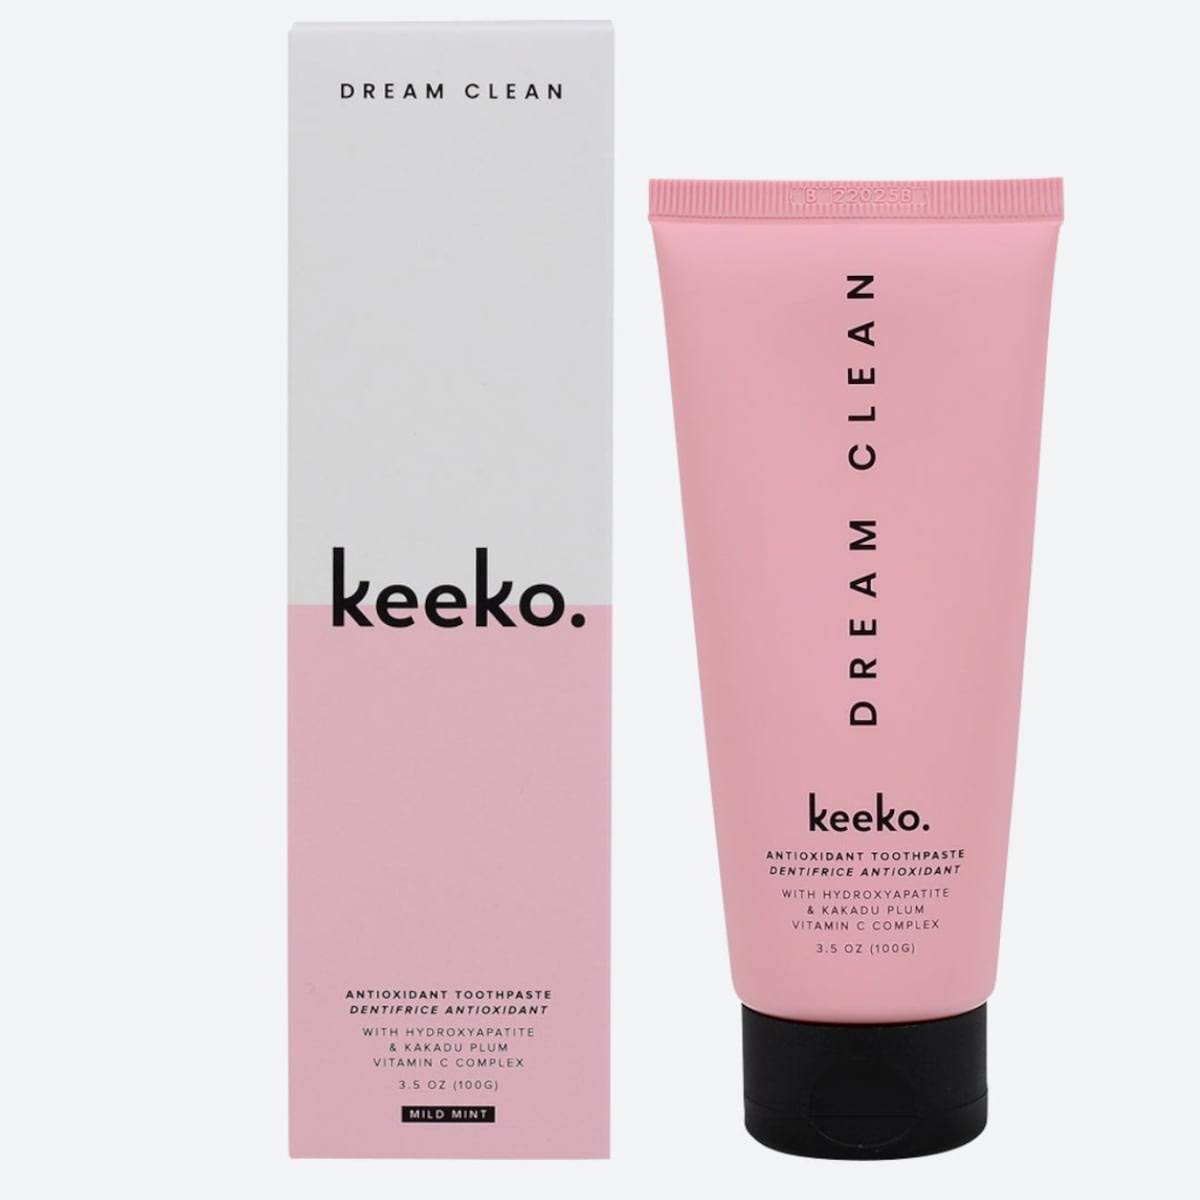 Keeko - Dream Clean Antioxidant Toothpaste - Tooth Paste